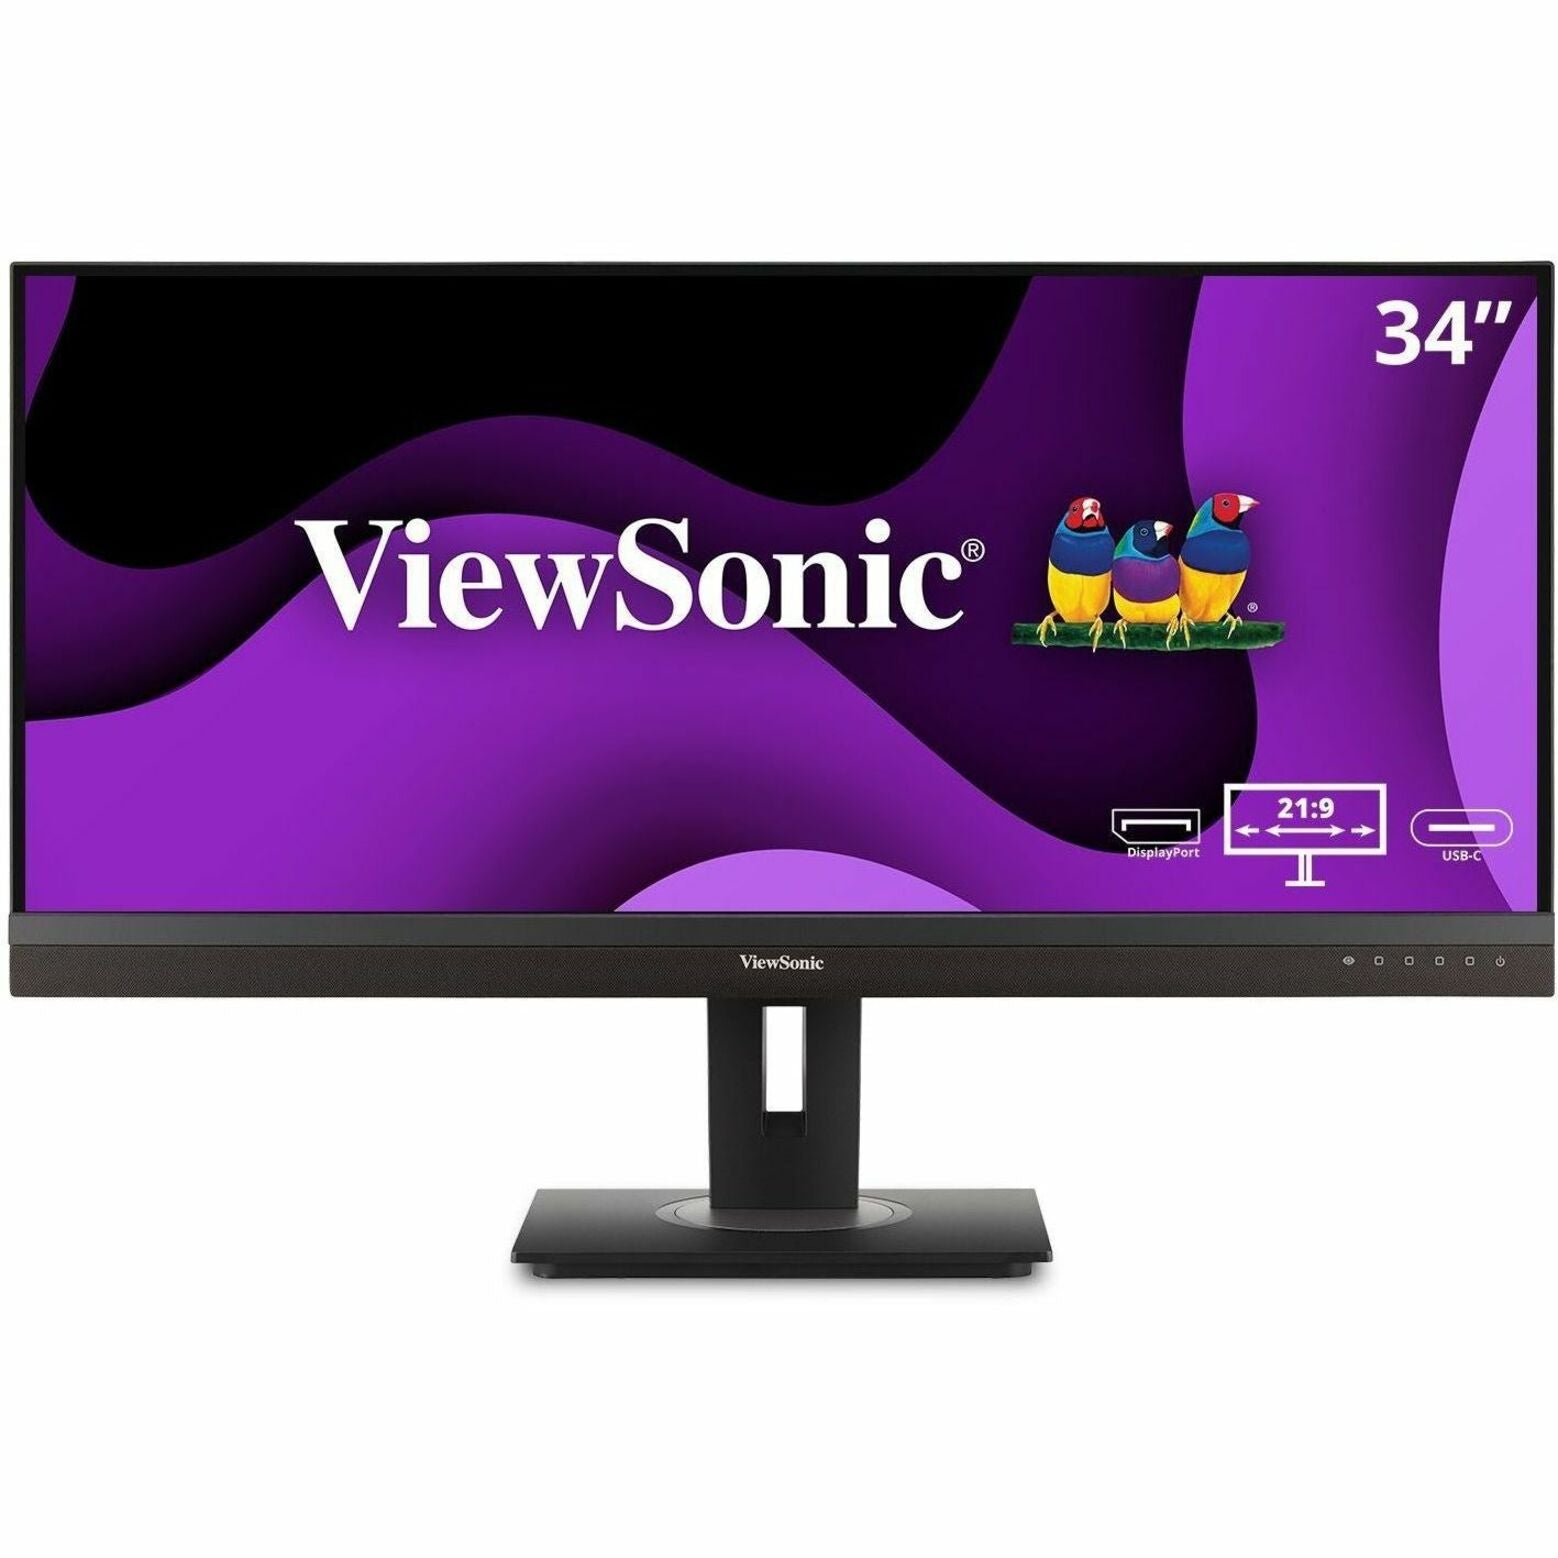 ViewSonic VG3456A 34 IPS LCD WQHD Monitor (HDMI DP and USB-C) 300 Nit Brightness 16.7 Million Colors 